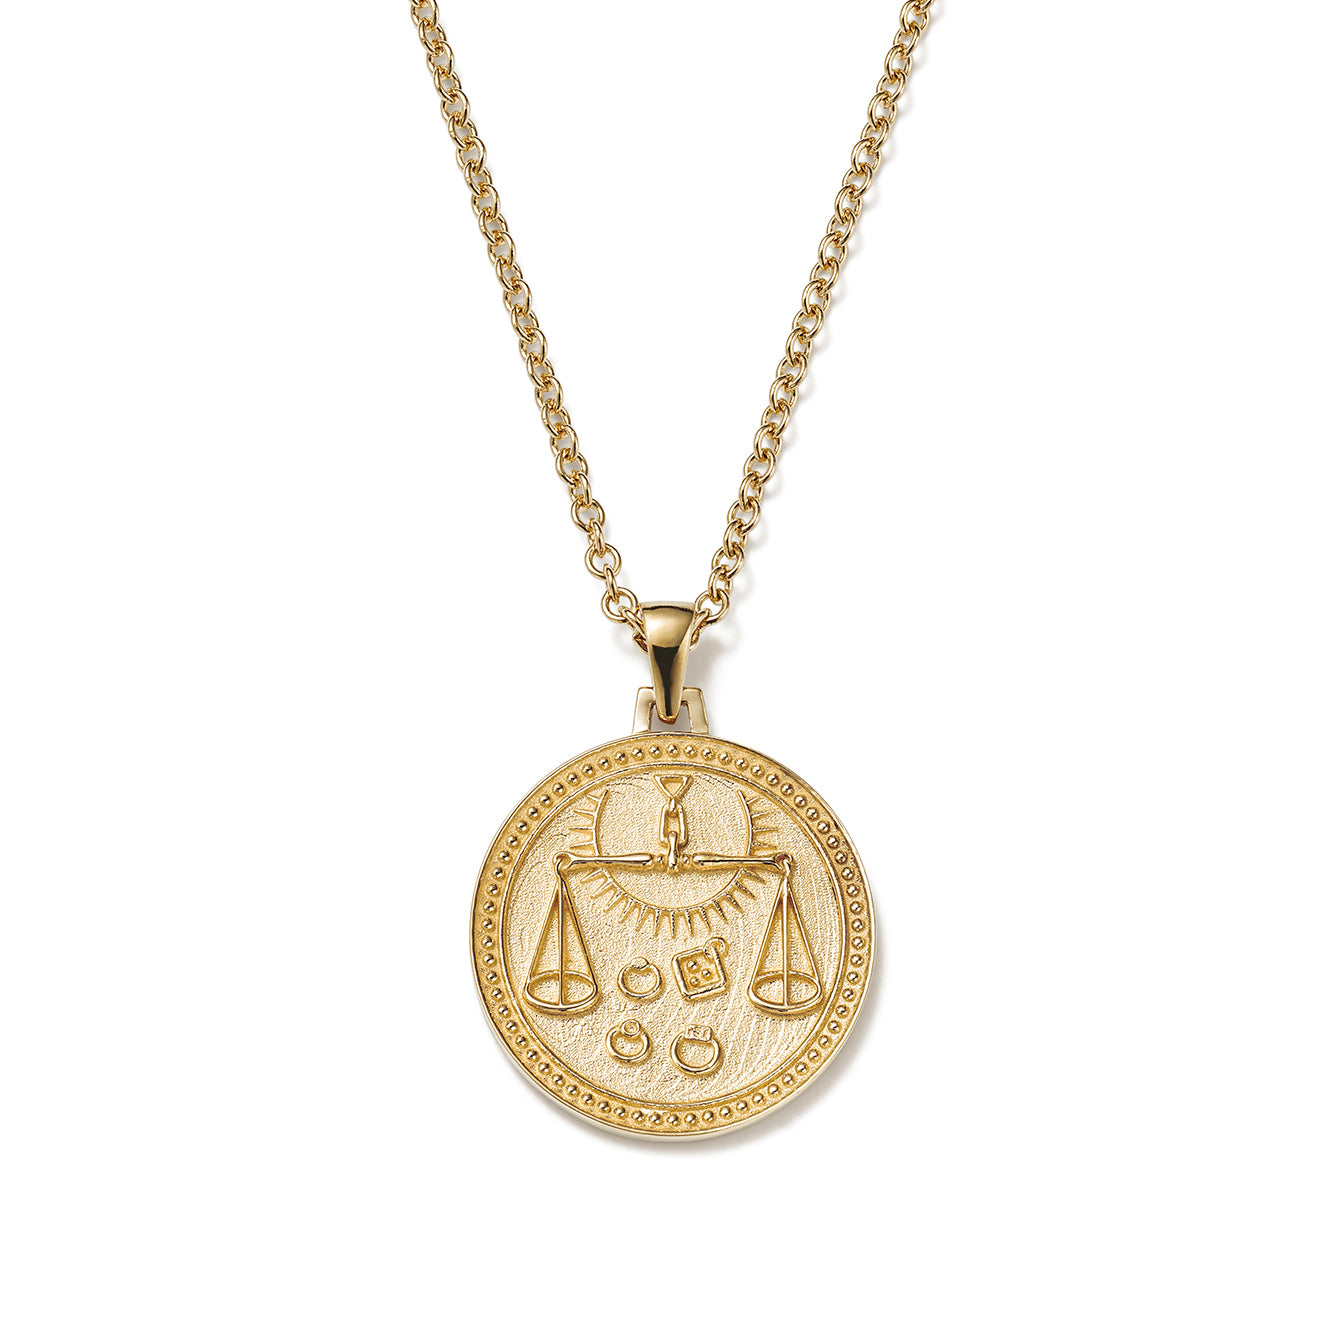 Ethical Gold Pendant Necklace Featuring Libra Zodiac Design